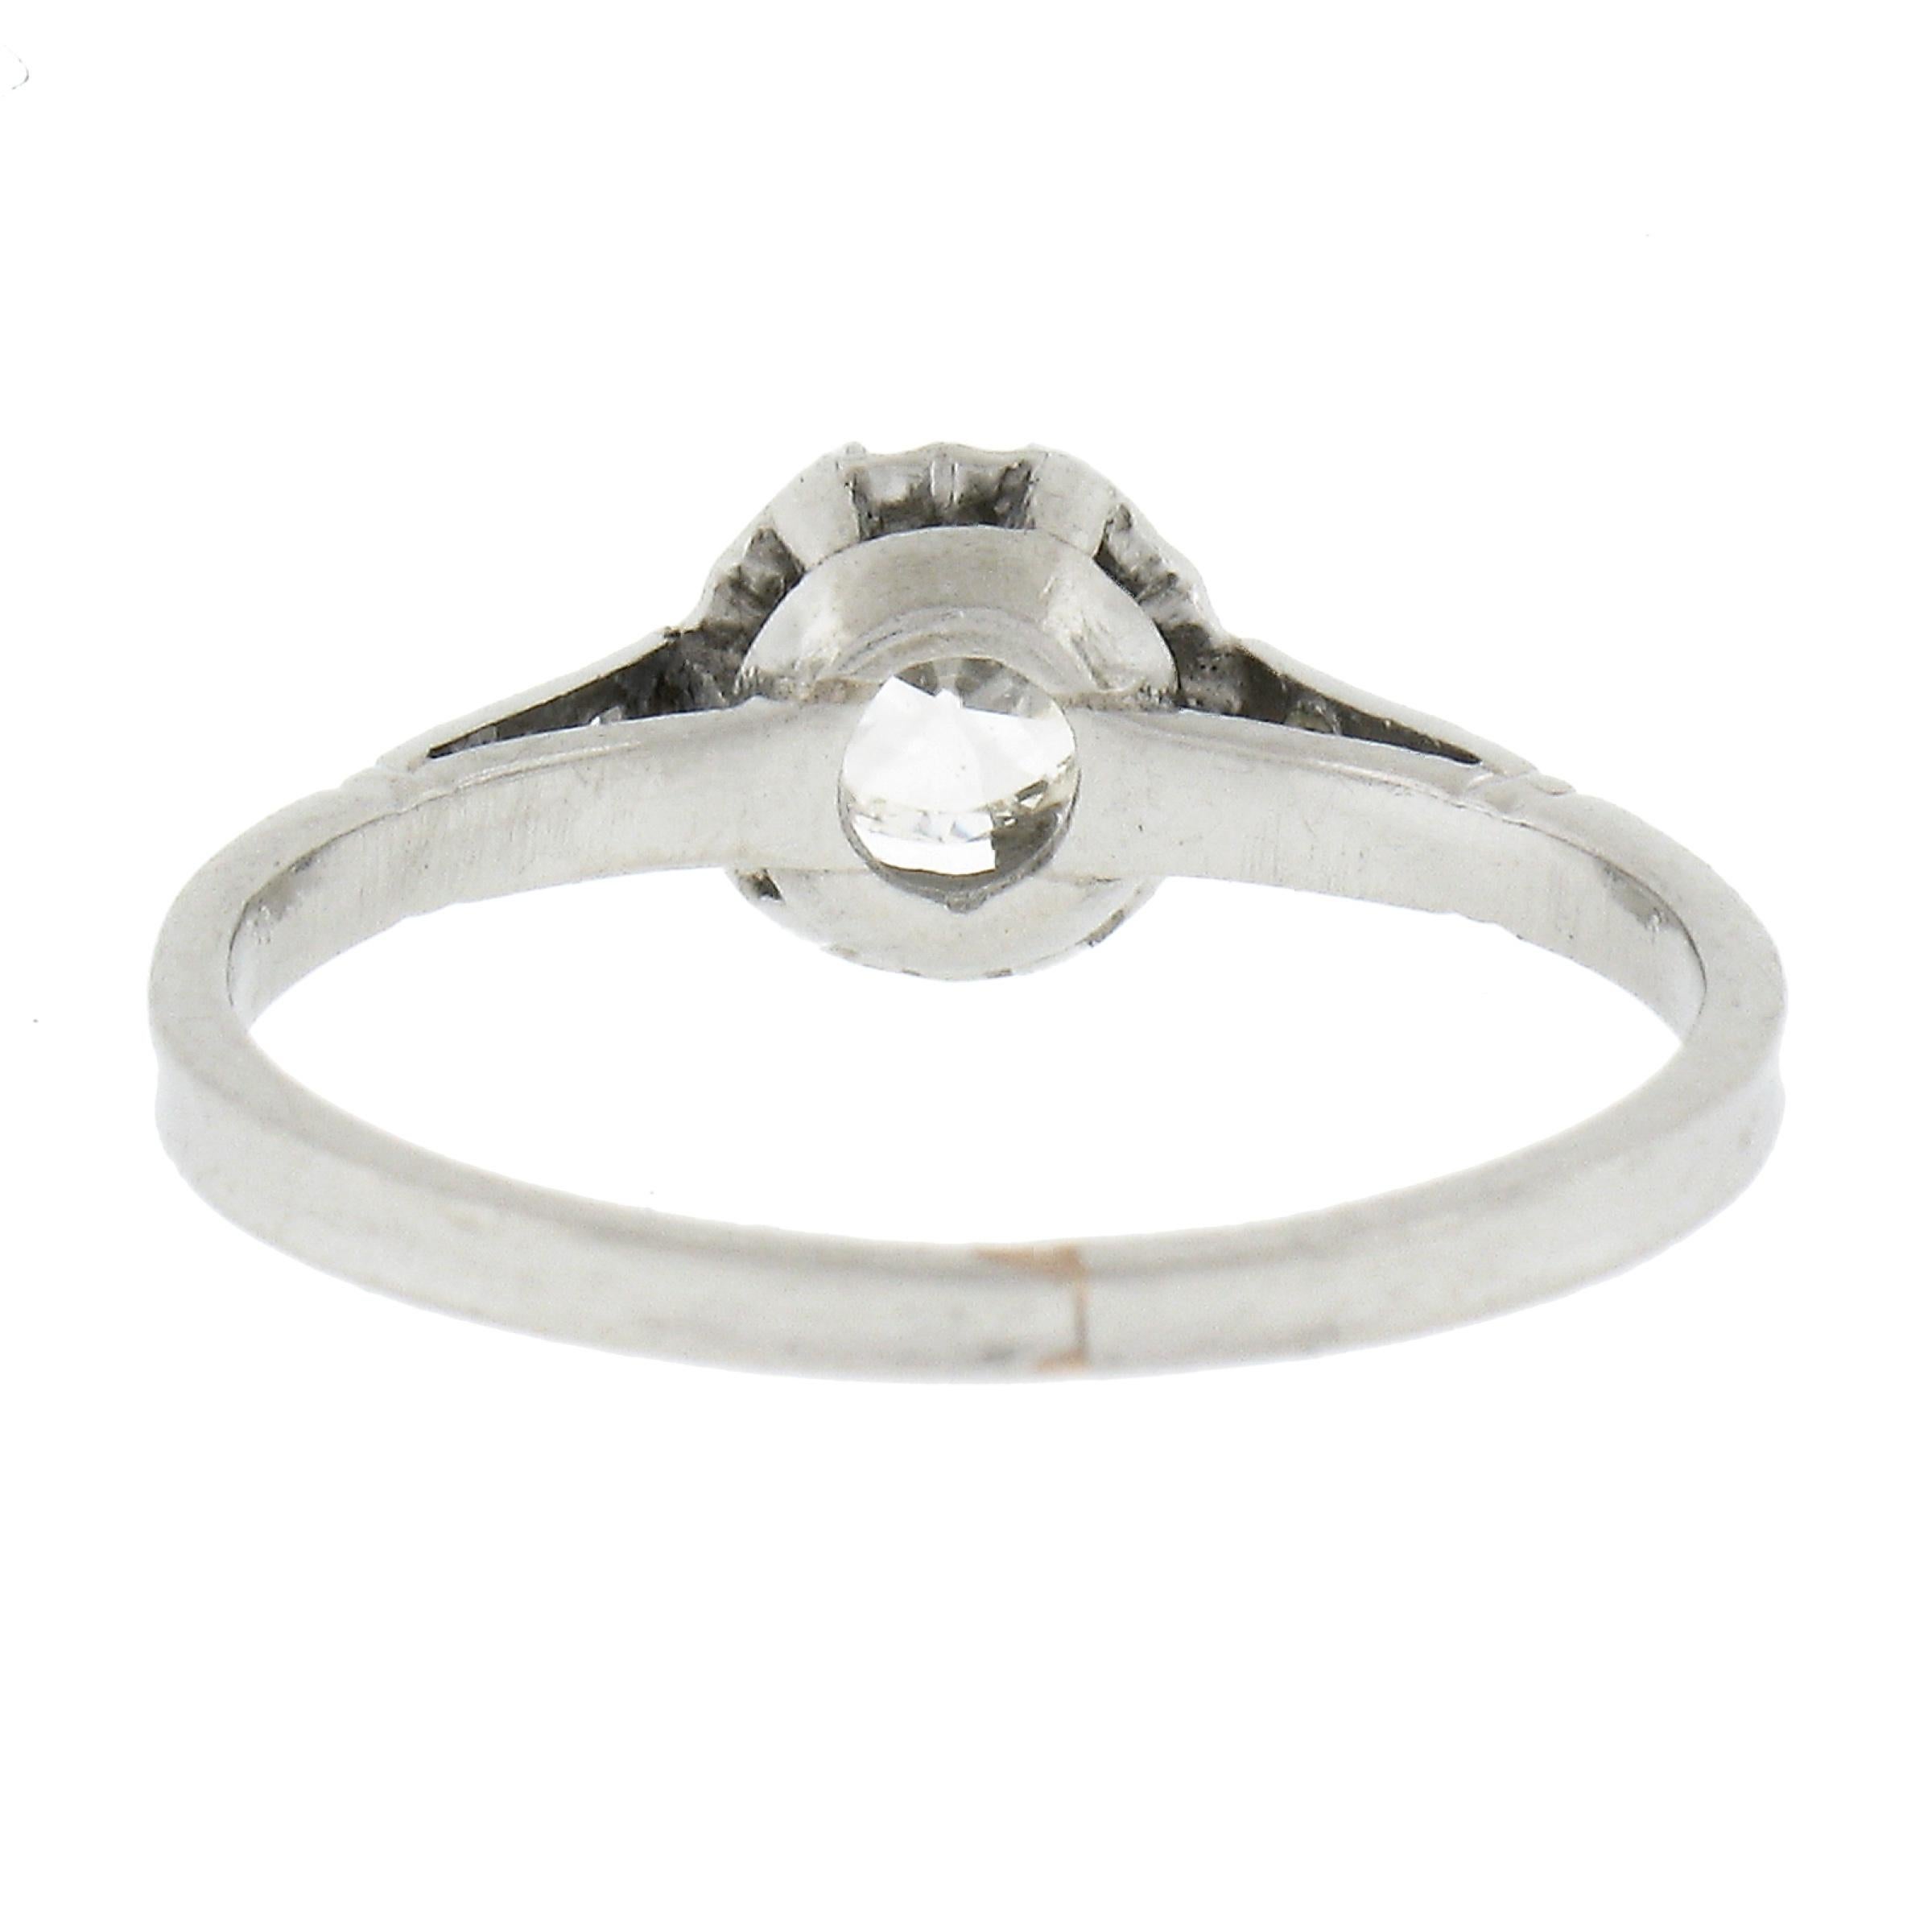 Antique Platinum 0.38ct Old Cut Diamond Solitaire Engagement Or Promise Ring 2